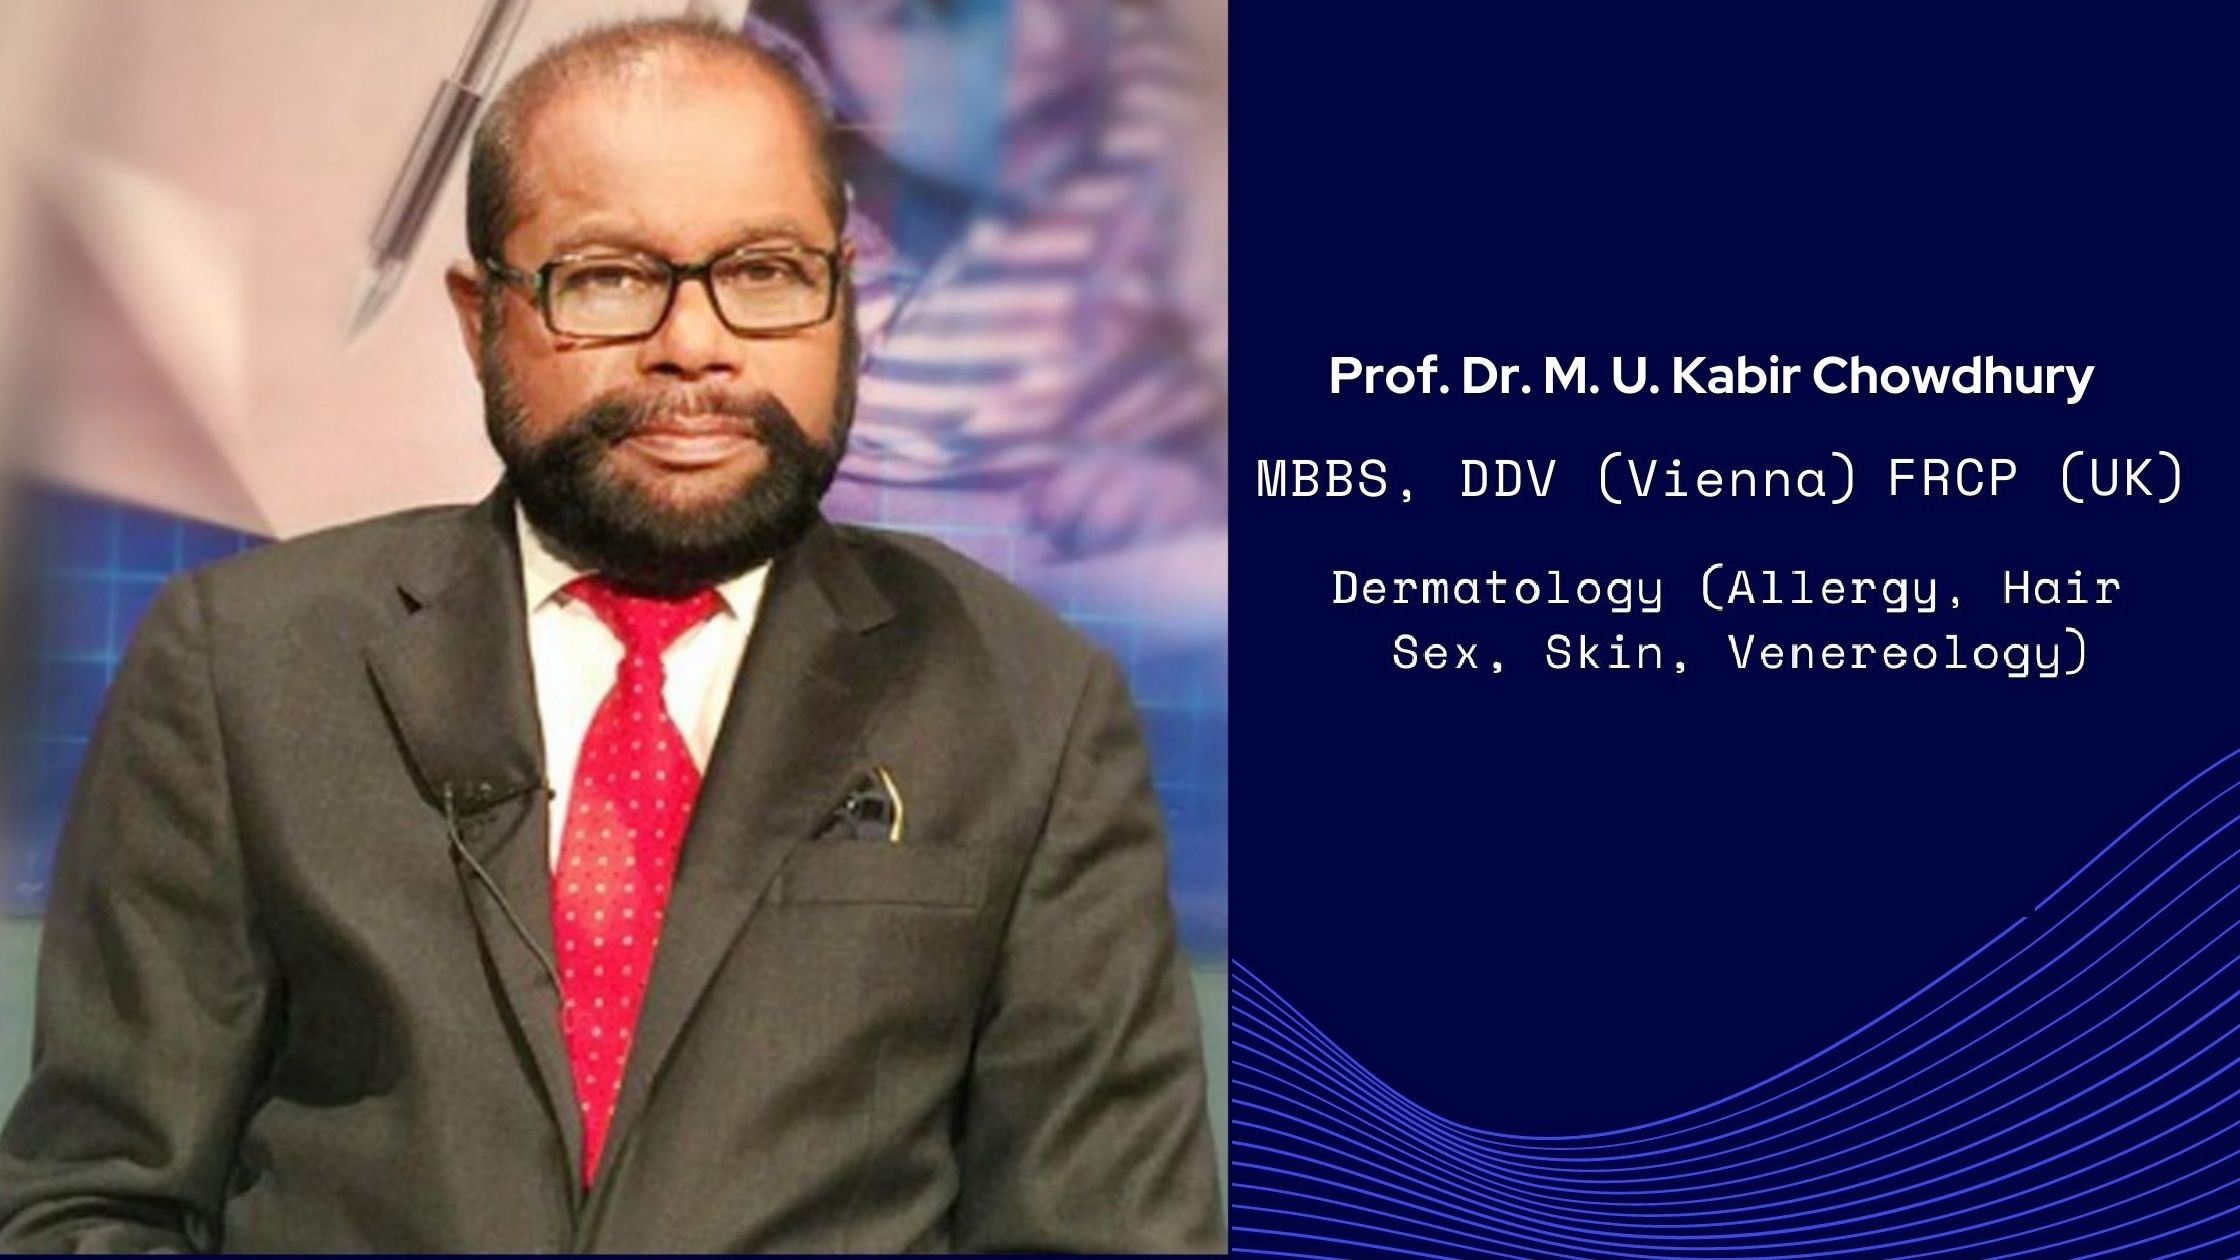 Prof Dr M U KABIR CHOWDHURY Dermatology Specialist Doctor